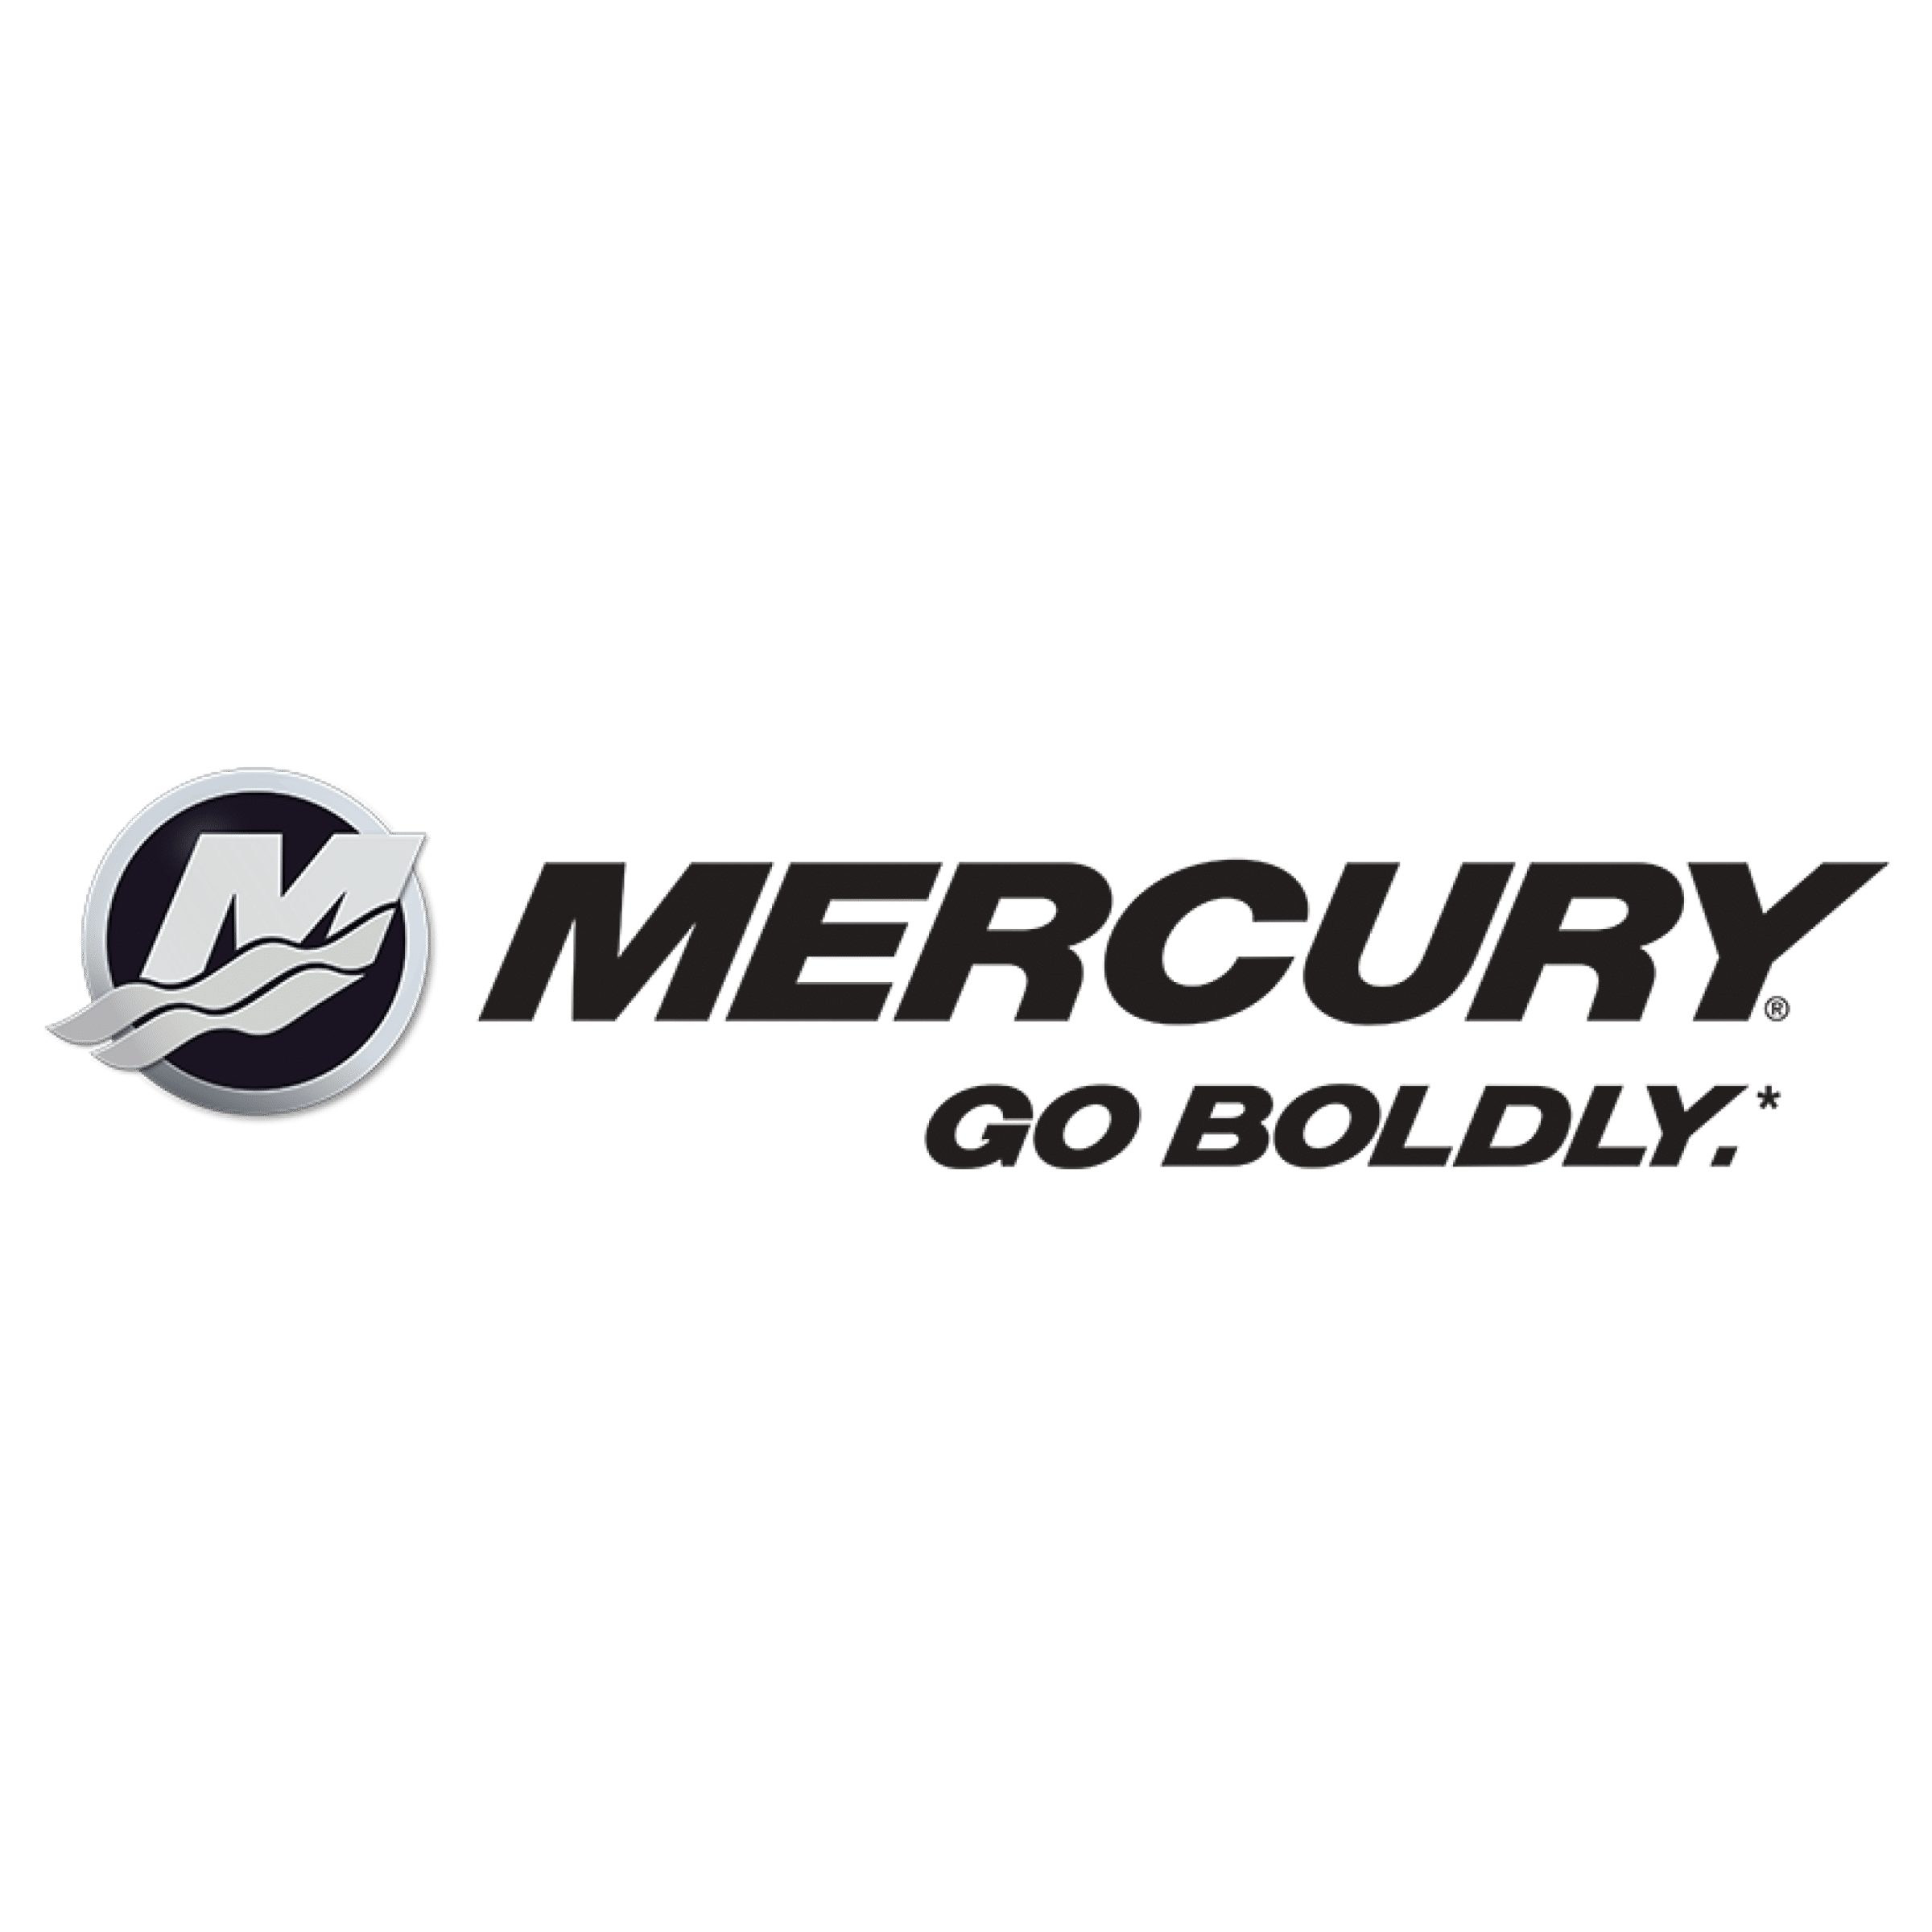 Mercury Logo - mercury logo | Swan River Sailing